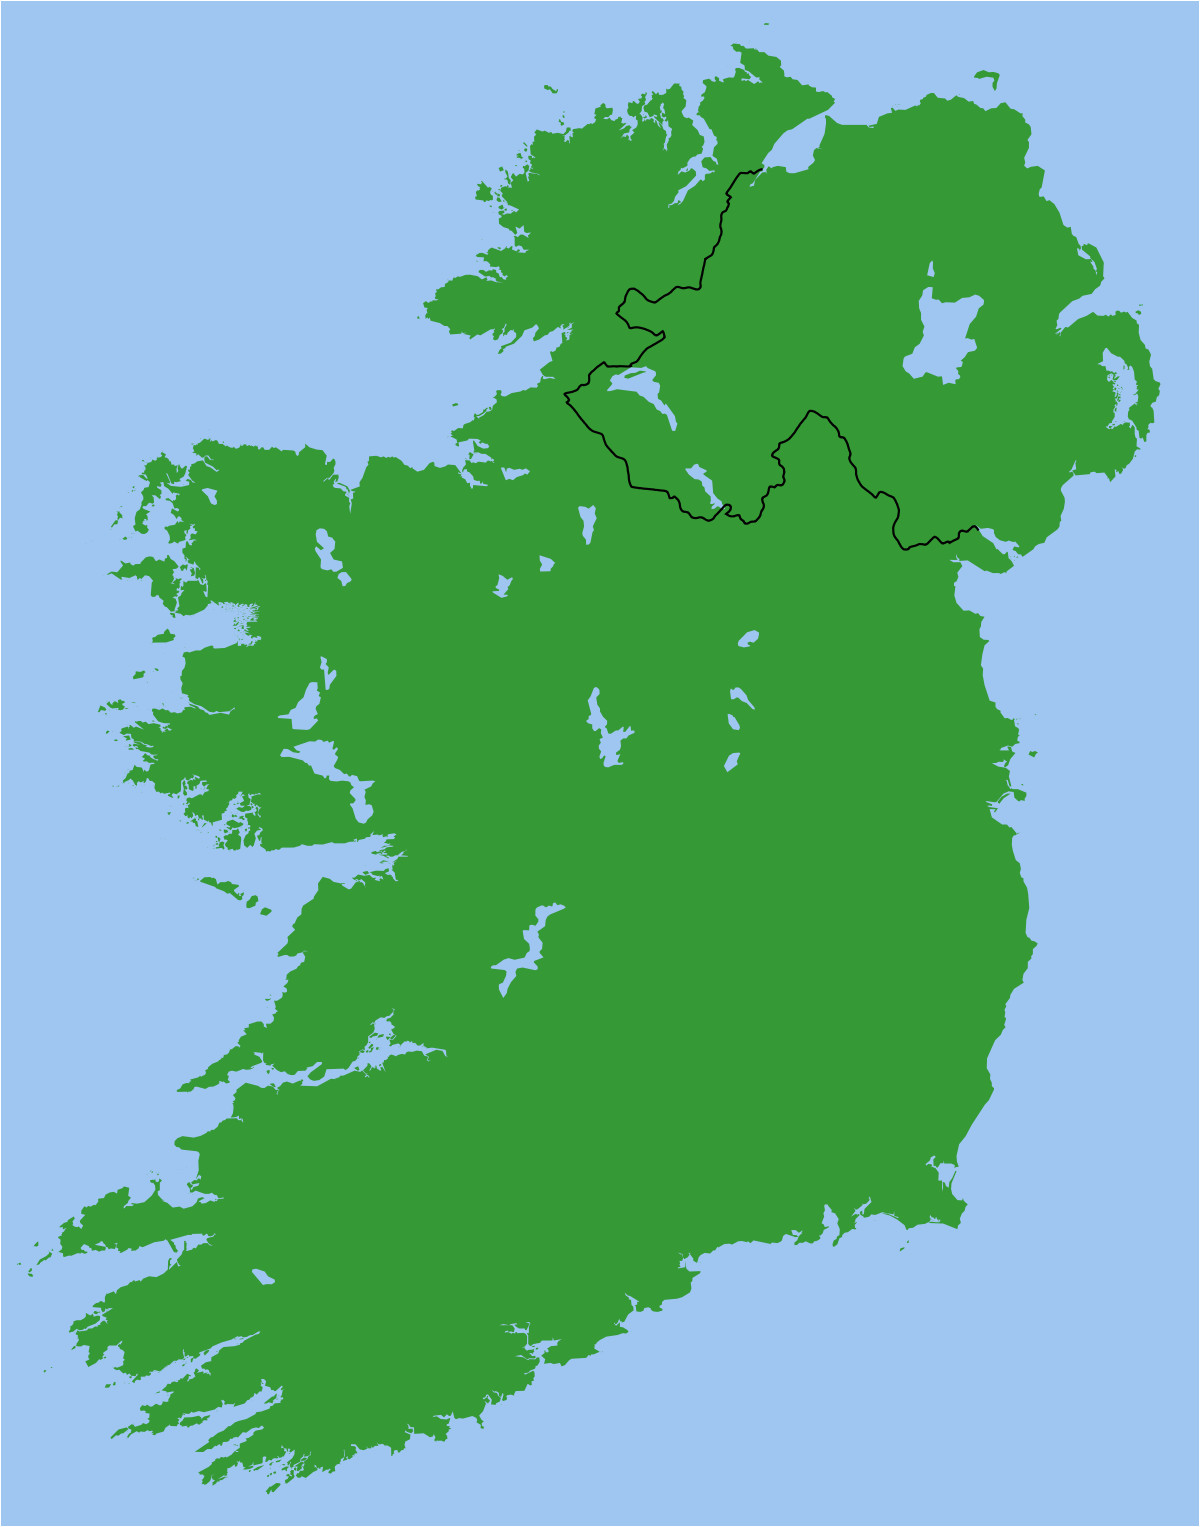 Maps Google Ie Ireland Republic Of Ireland United Kingdom Border Wikipedia Of Maps Google Ie Ireland 